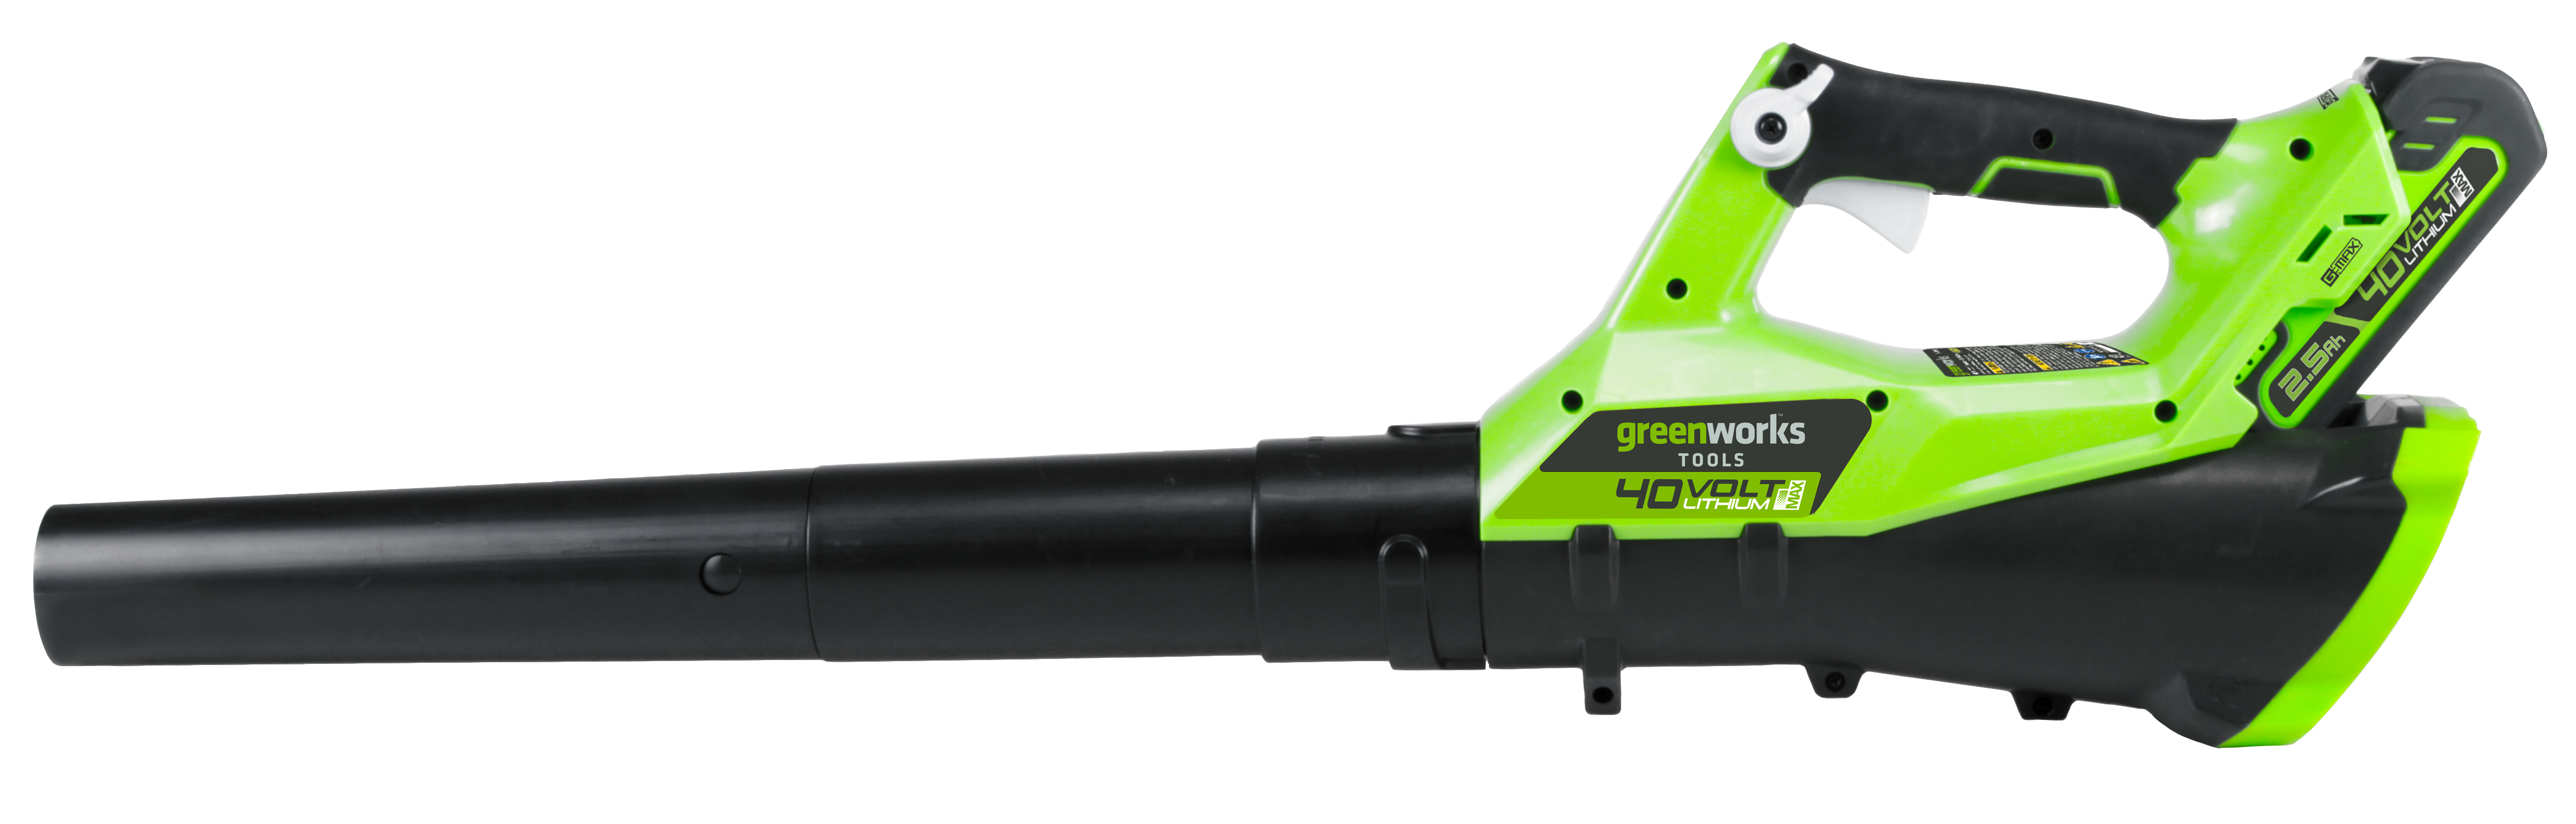 Воздуходувка Greenworks G40ab (2400807)